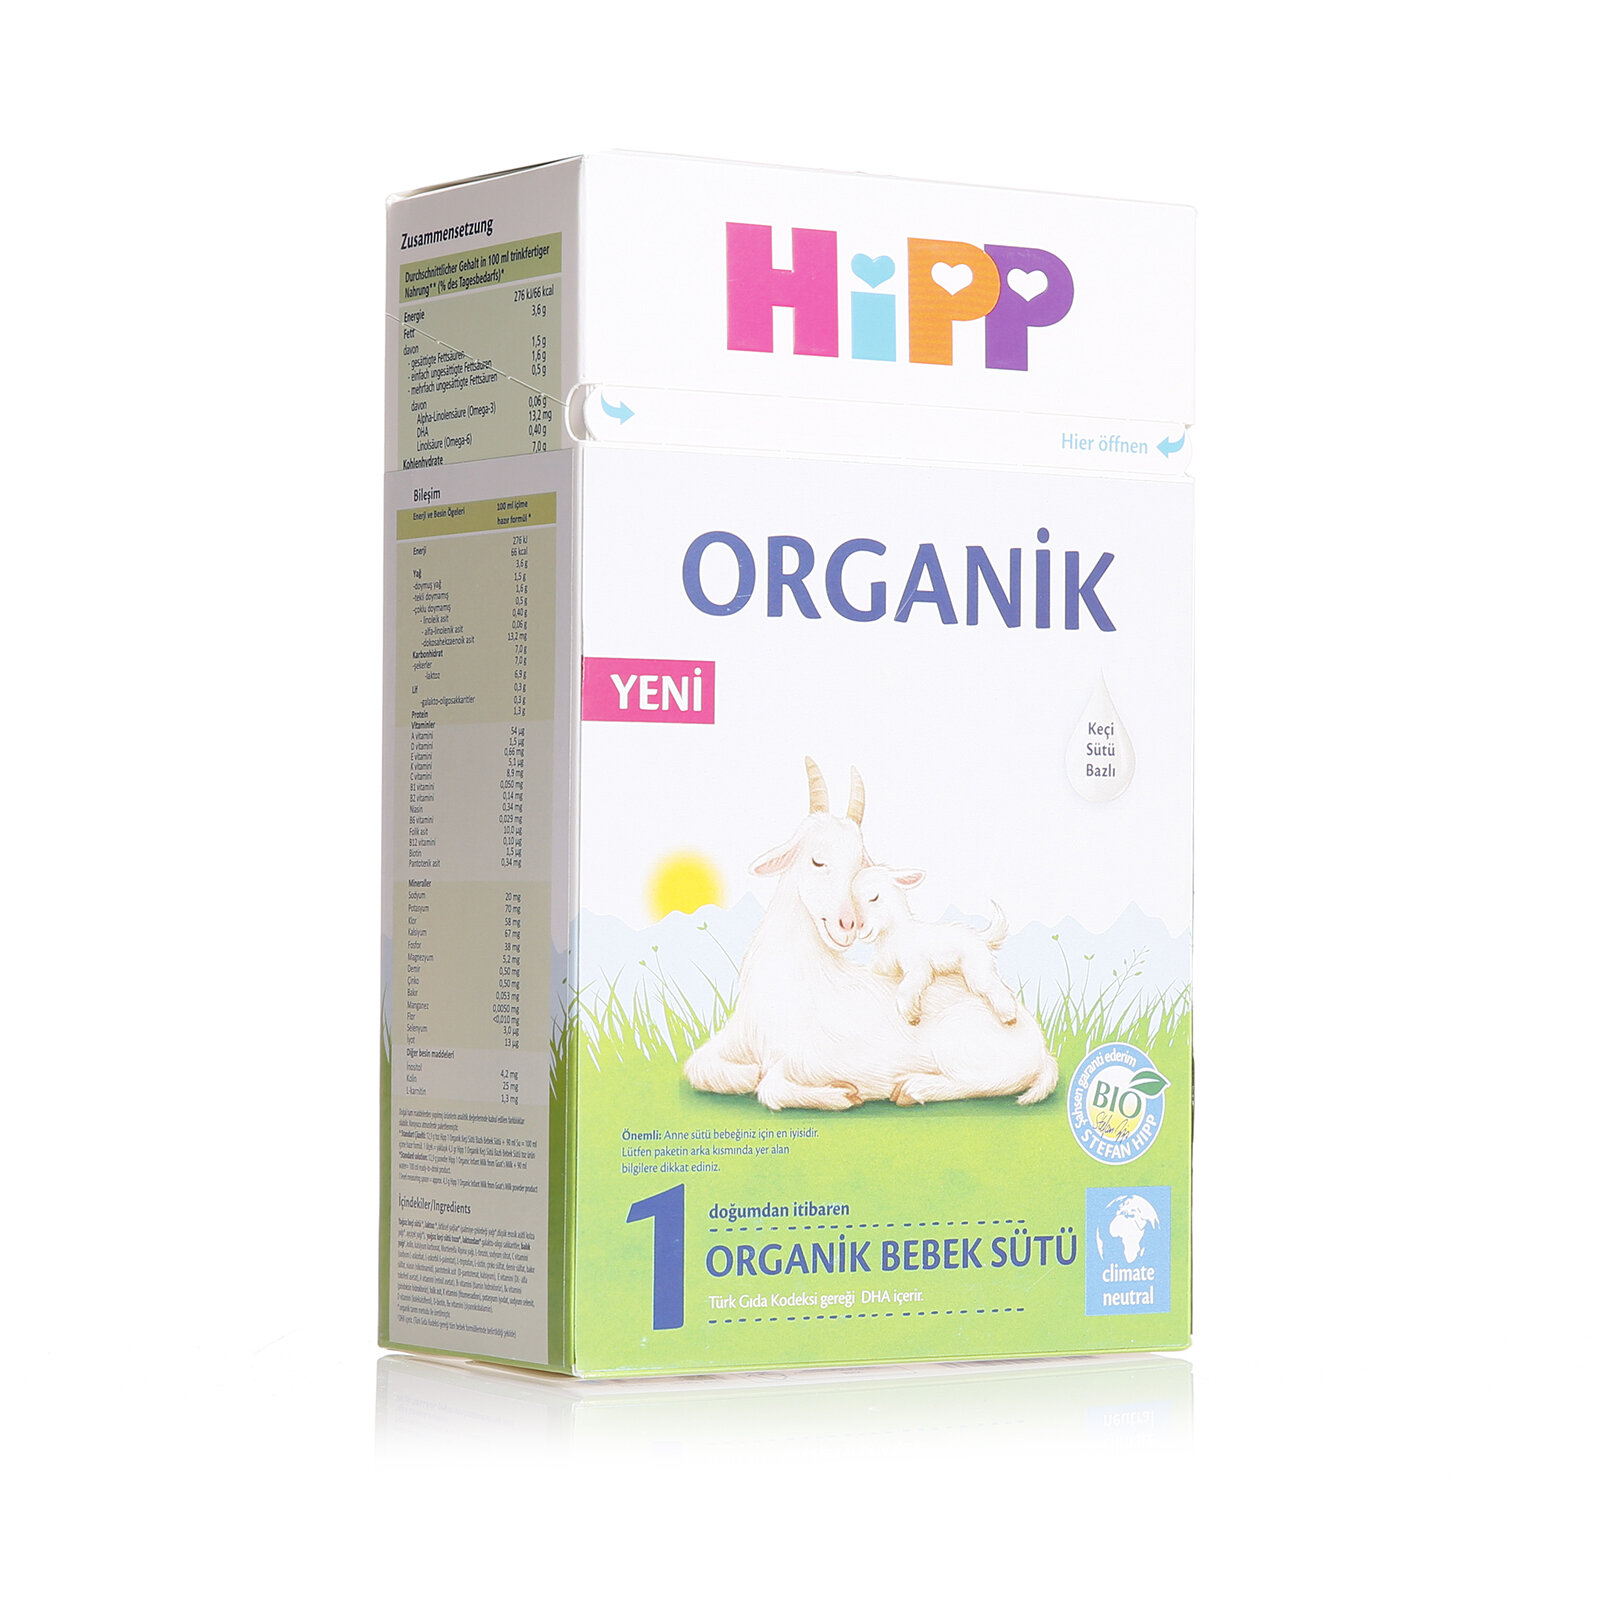 1 Organik Keçi Sütlü Bebek Sütü 400 gr 0-6 Ay